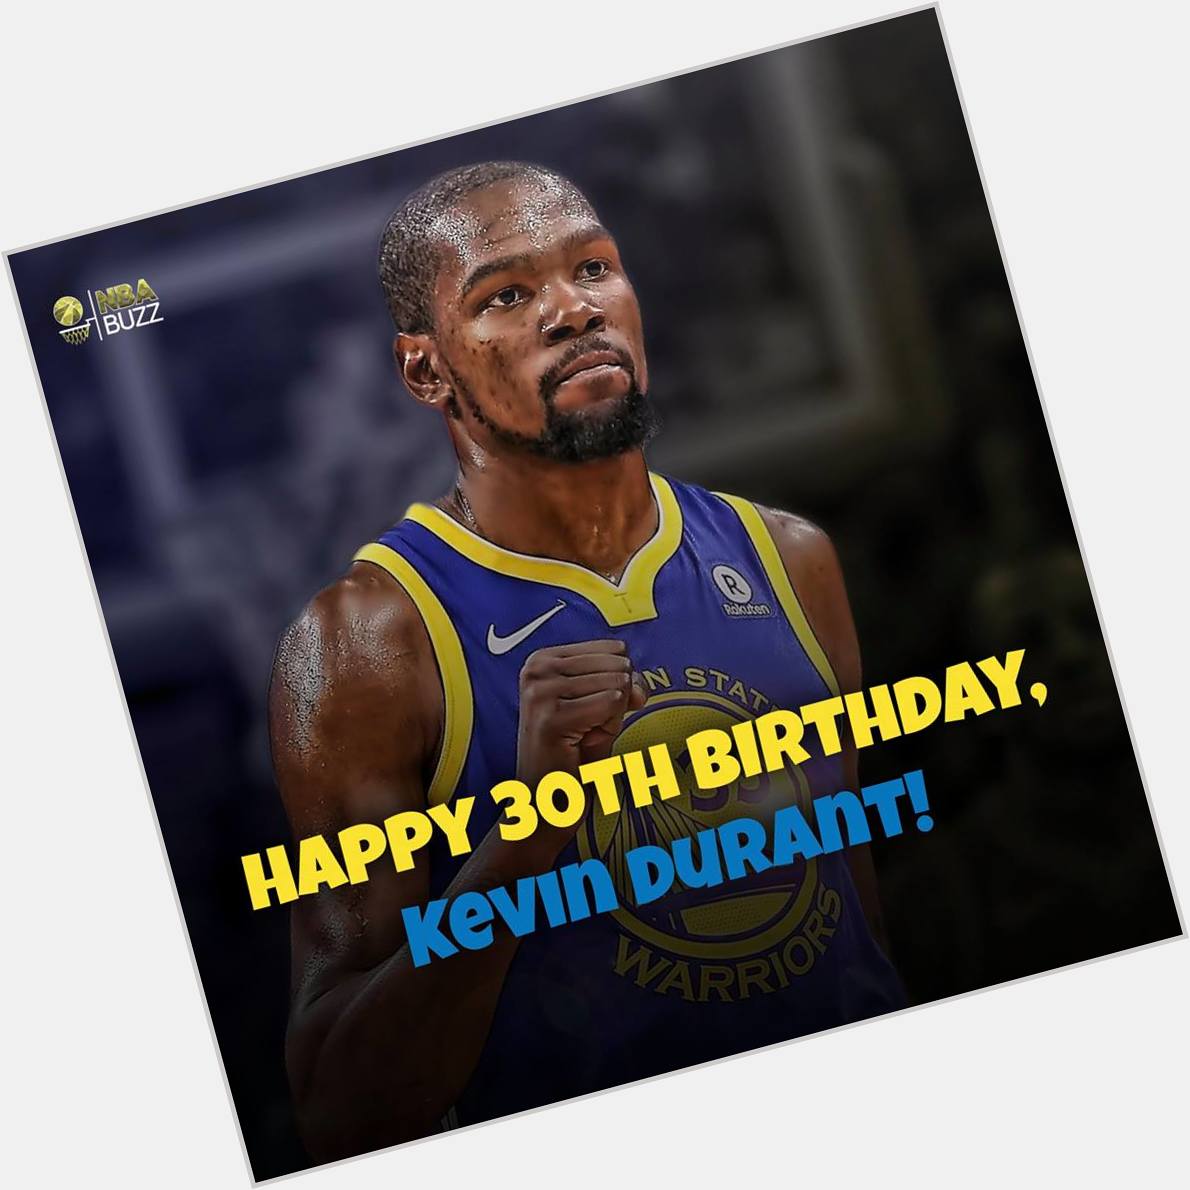 Happy 30th Birthday, Kevin Durant! Enjoy the 2018 2019 NBA Season. 